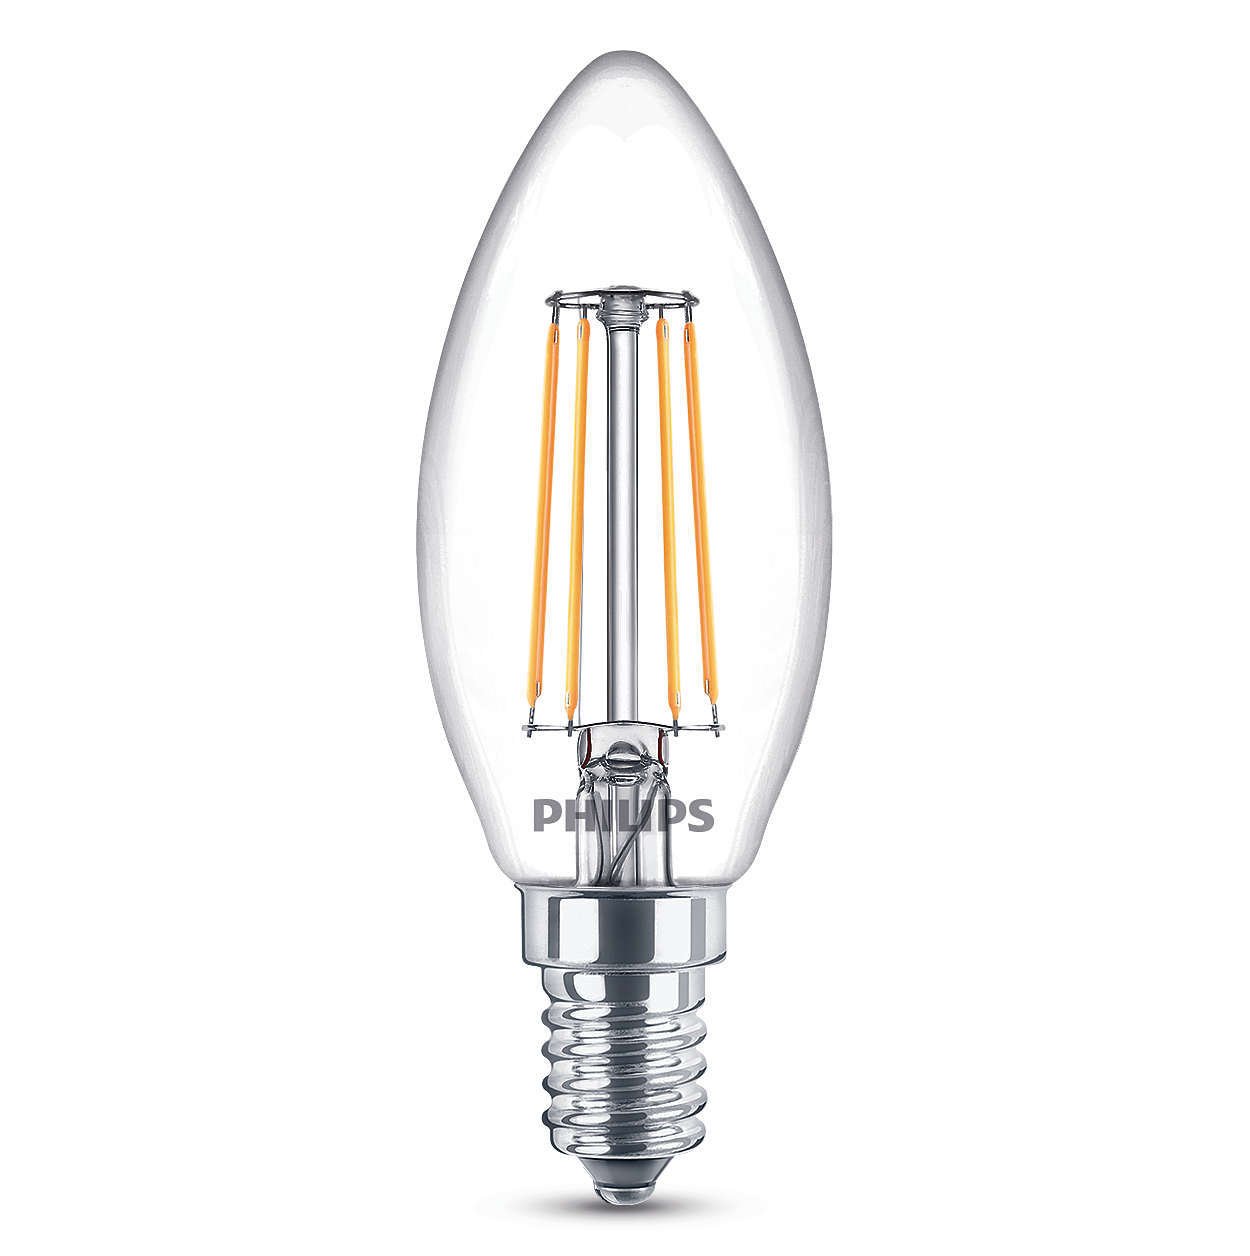 Dekoratyvinė šviesos diodų lemputė PHILIPS, B35, 4 W, E14, 470 lm, 2700K, atitinka 40 W